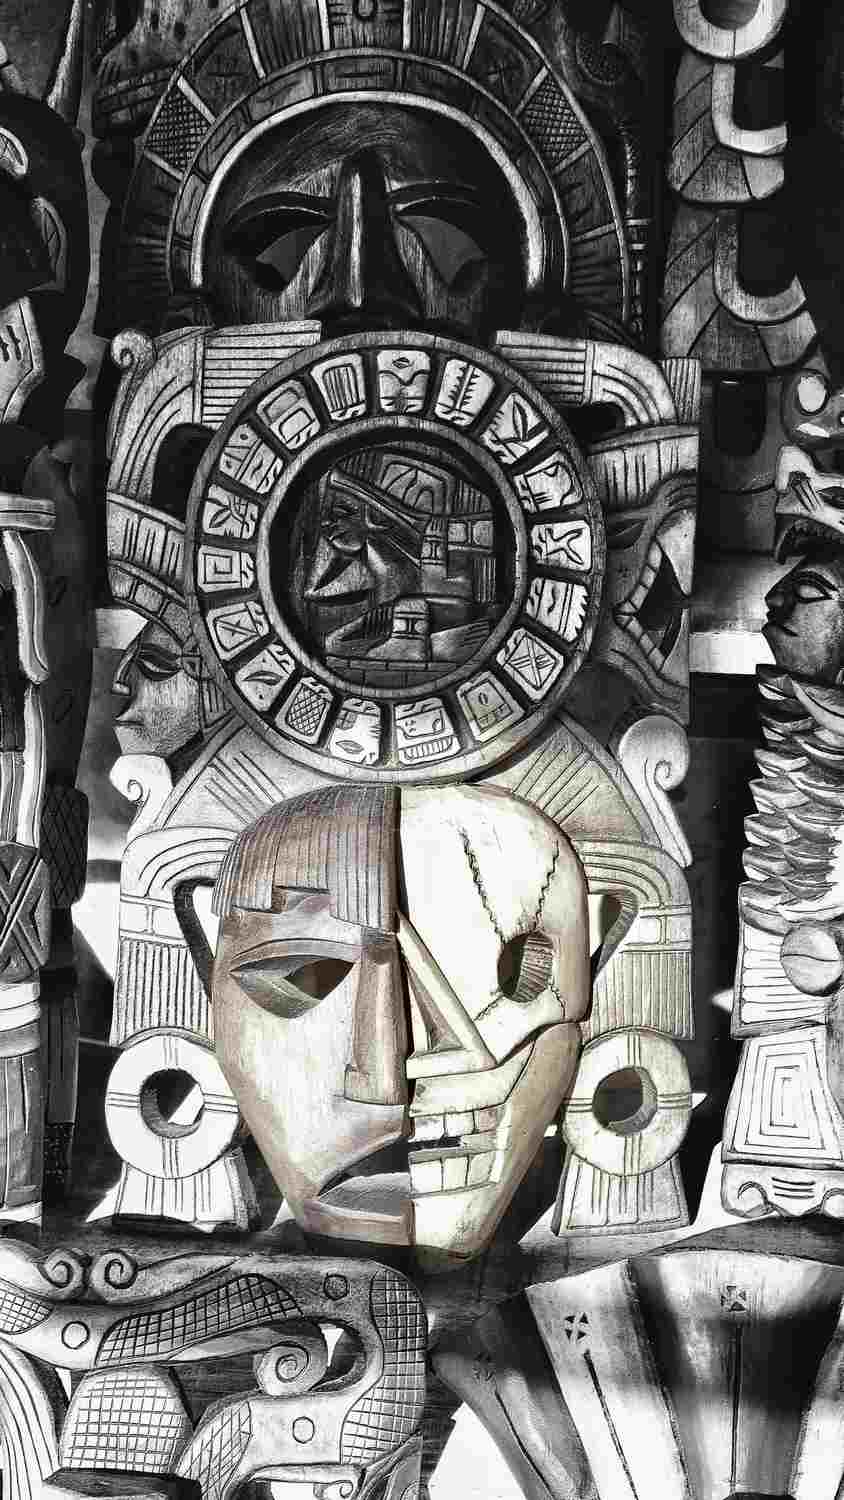 Artistic Mayan face carvings.